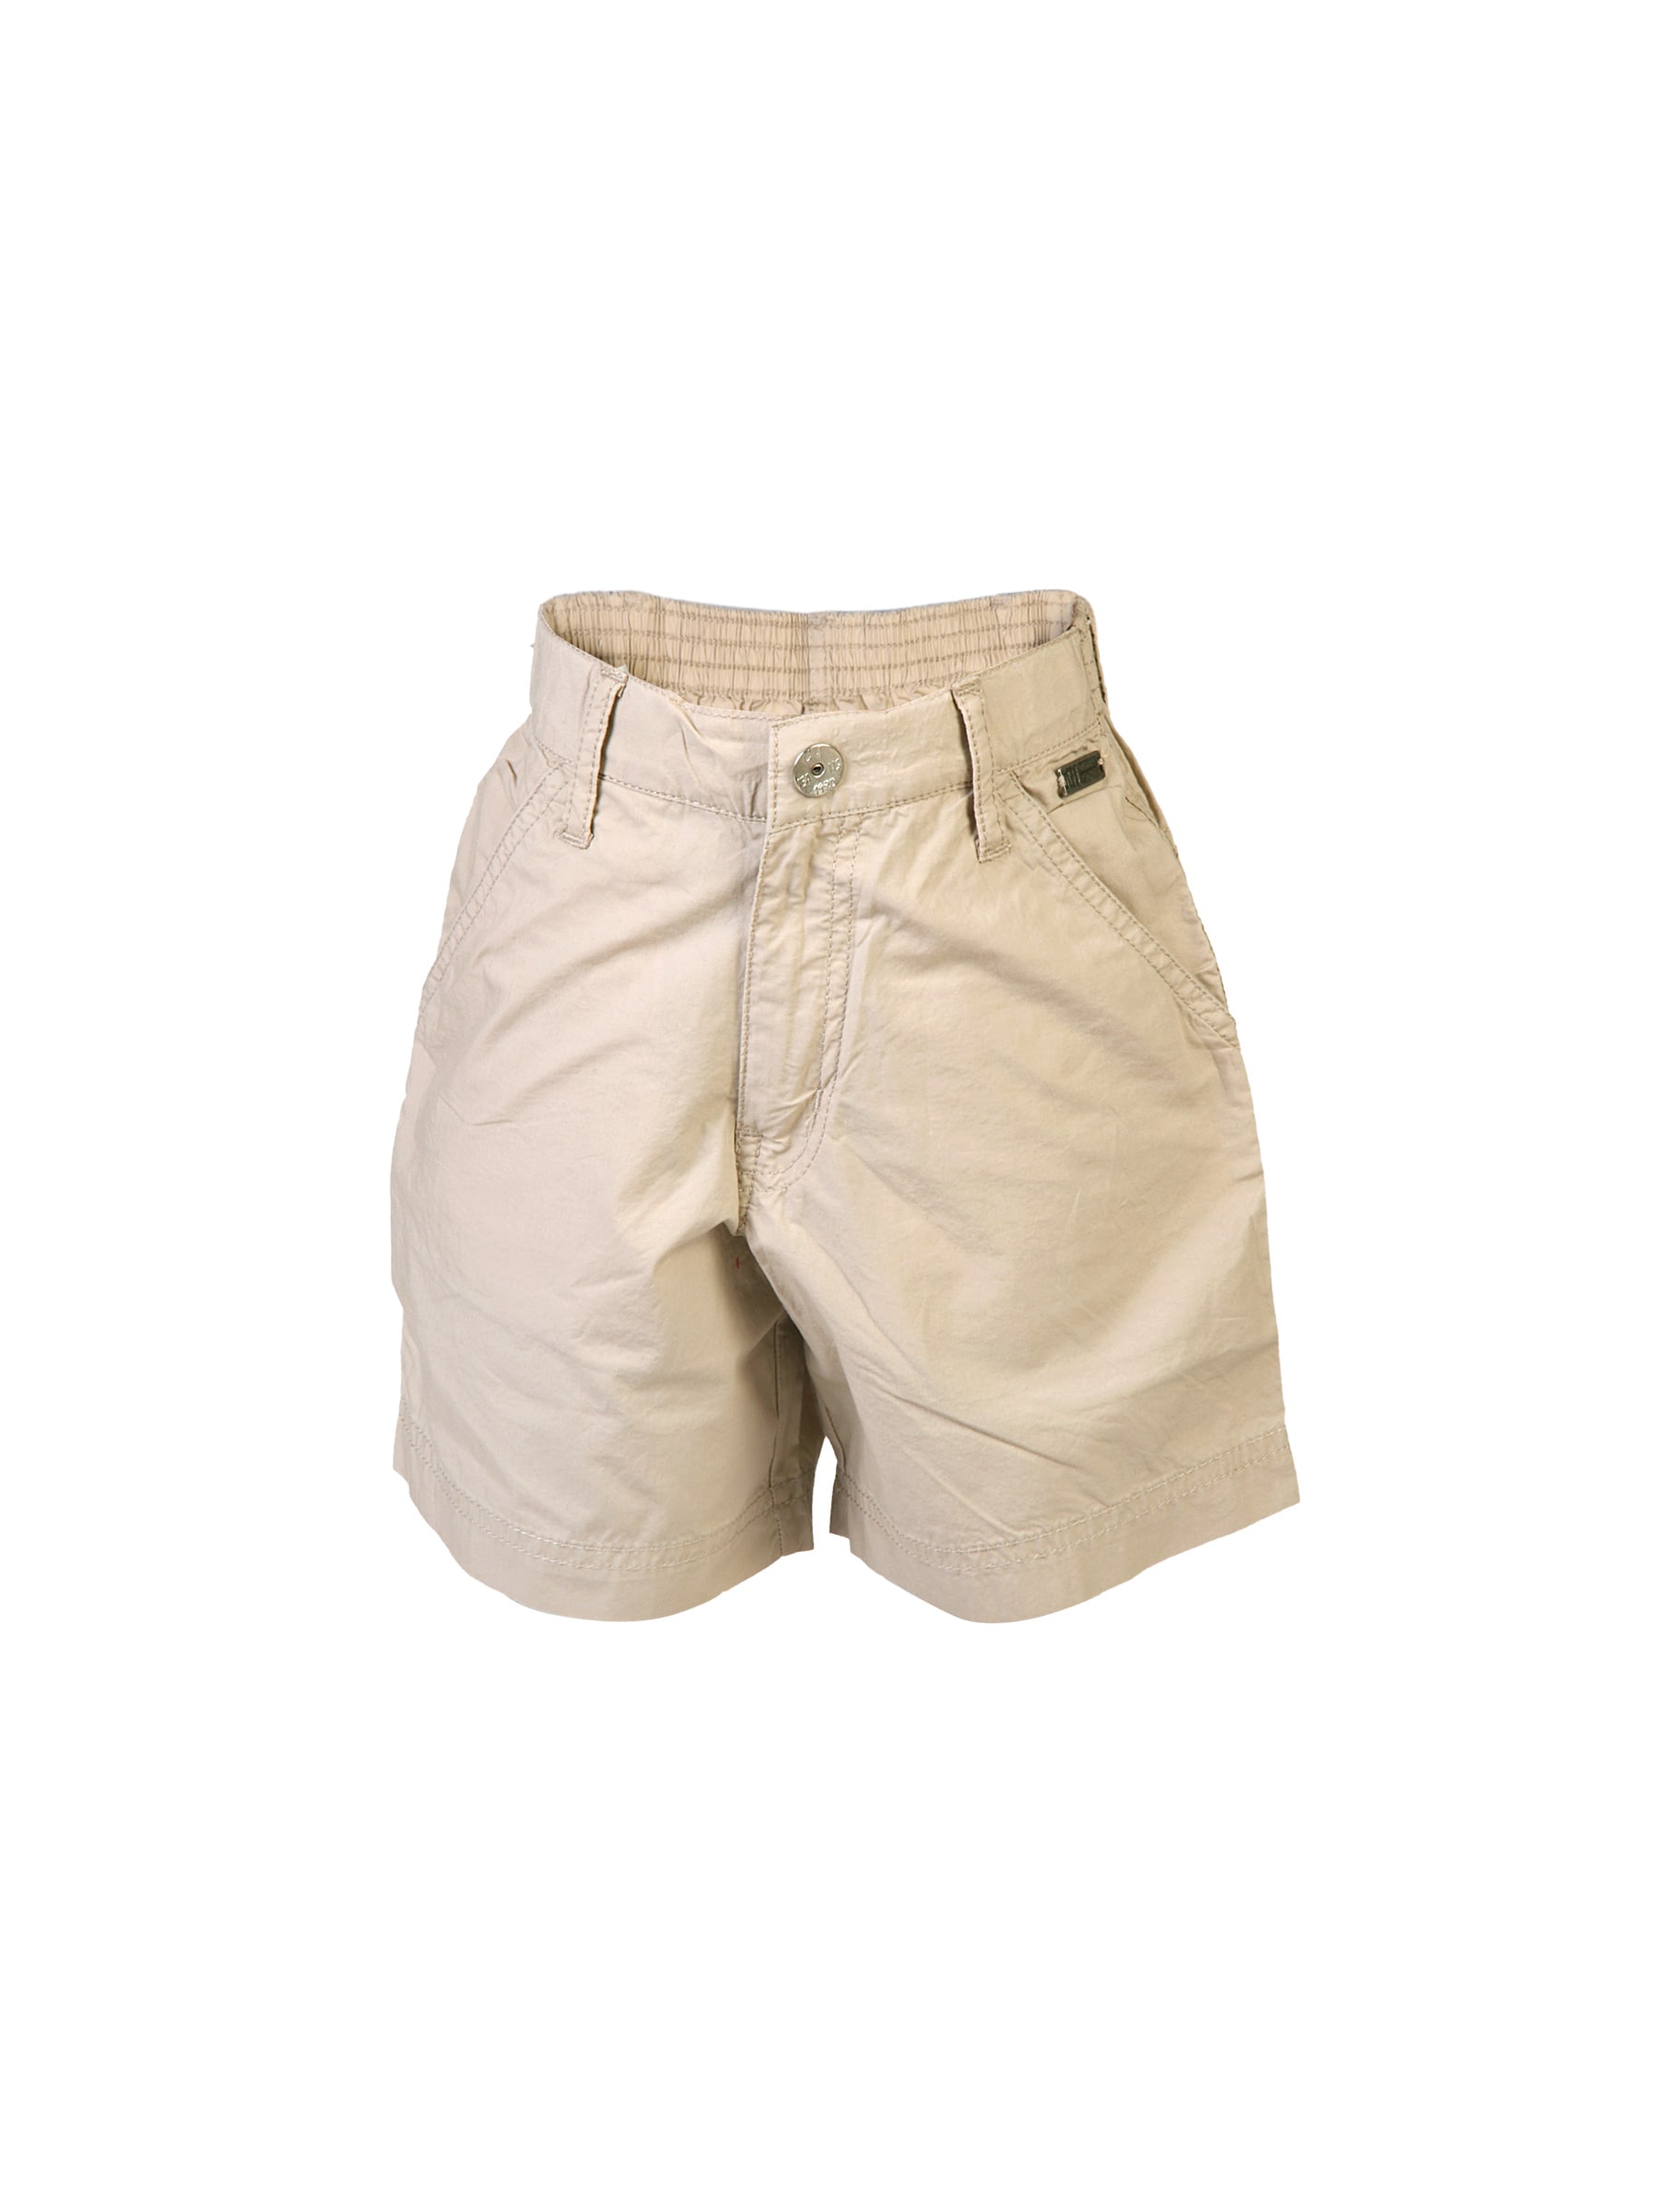 Gini and Jony Kids Boys Solid Beige Shorts